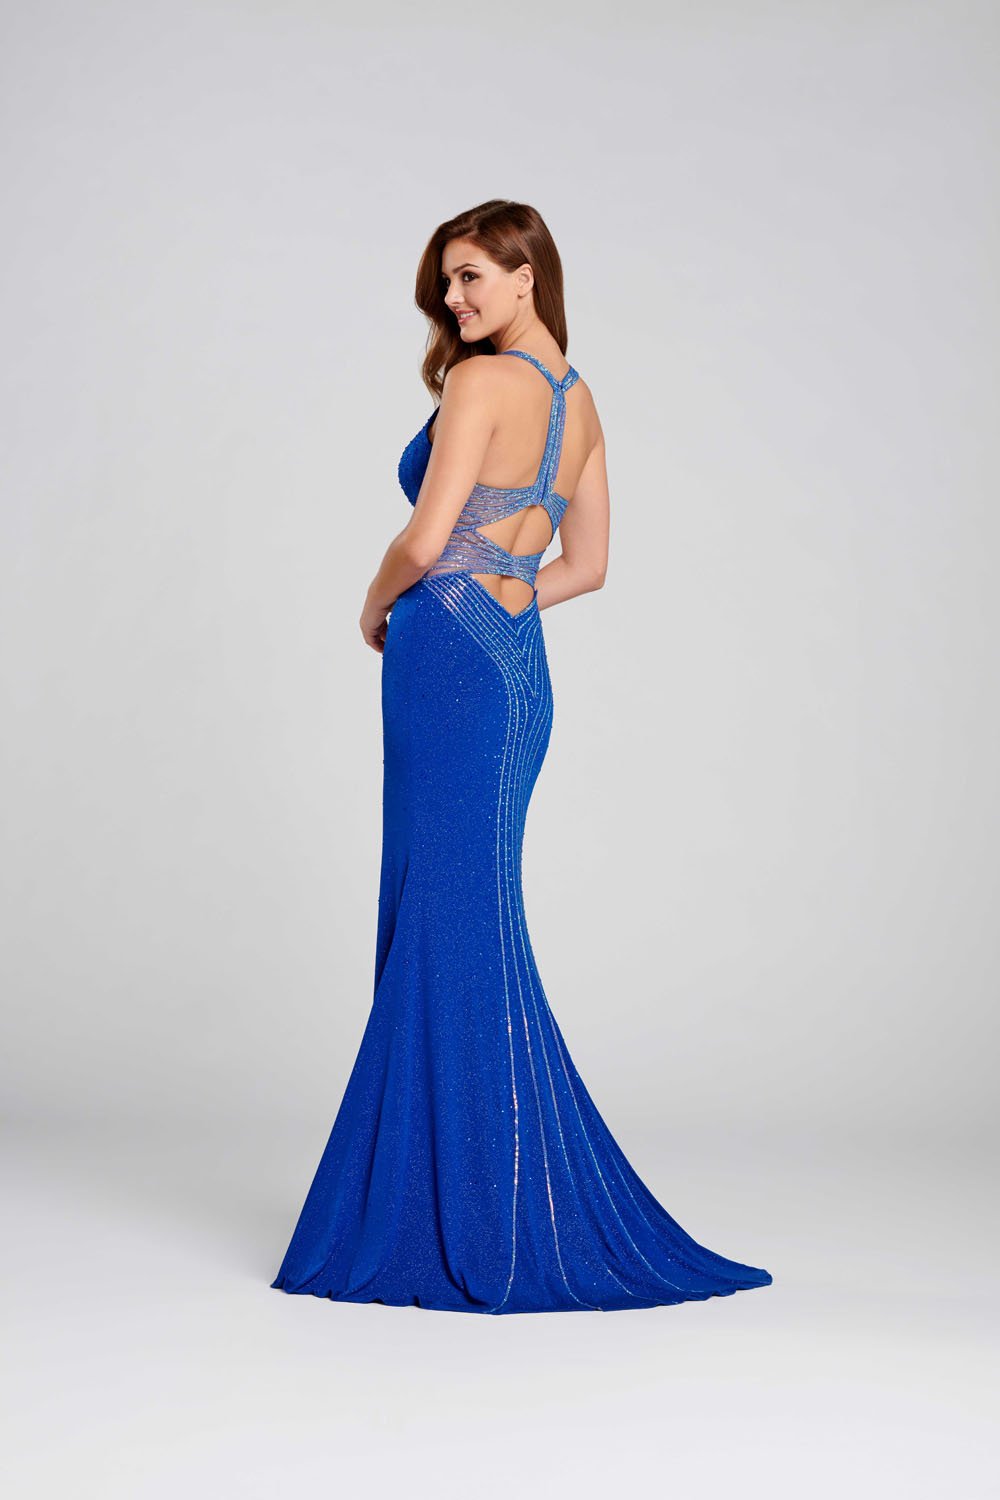 ellie wilde royal blue prom dress